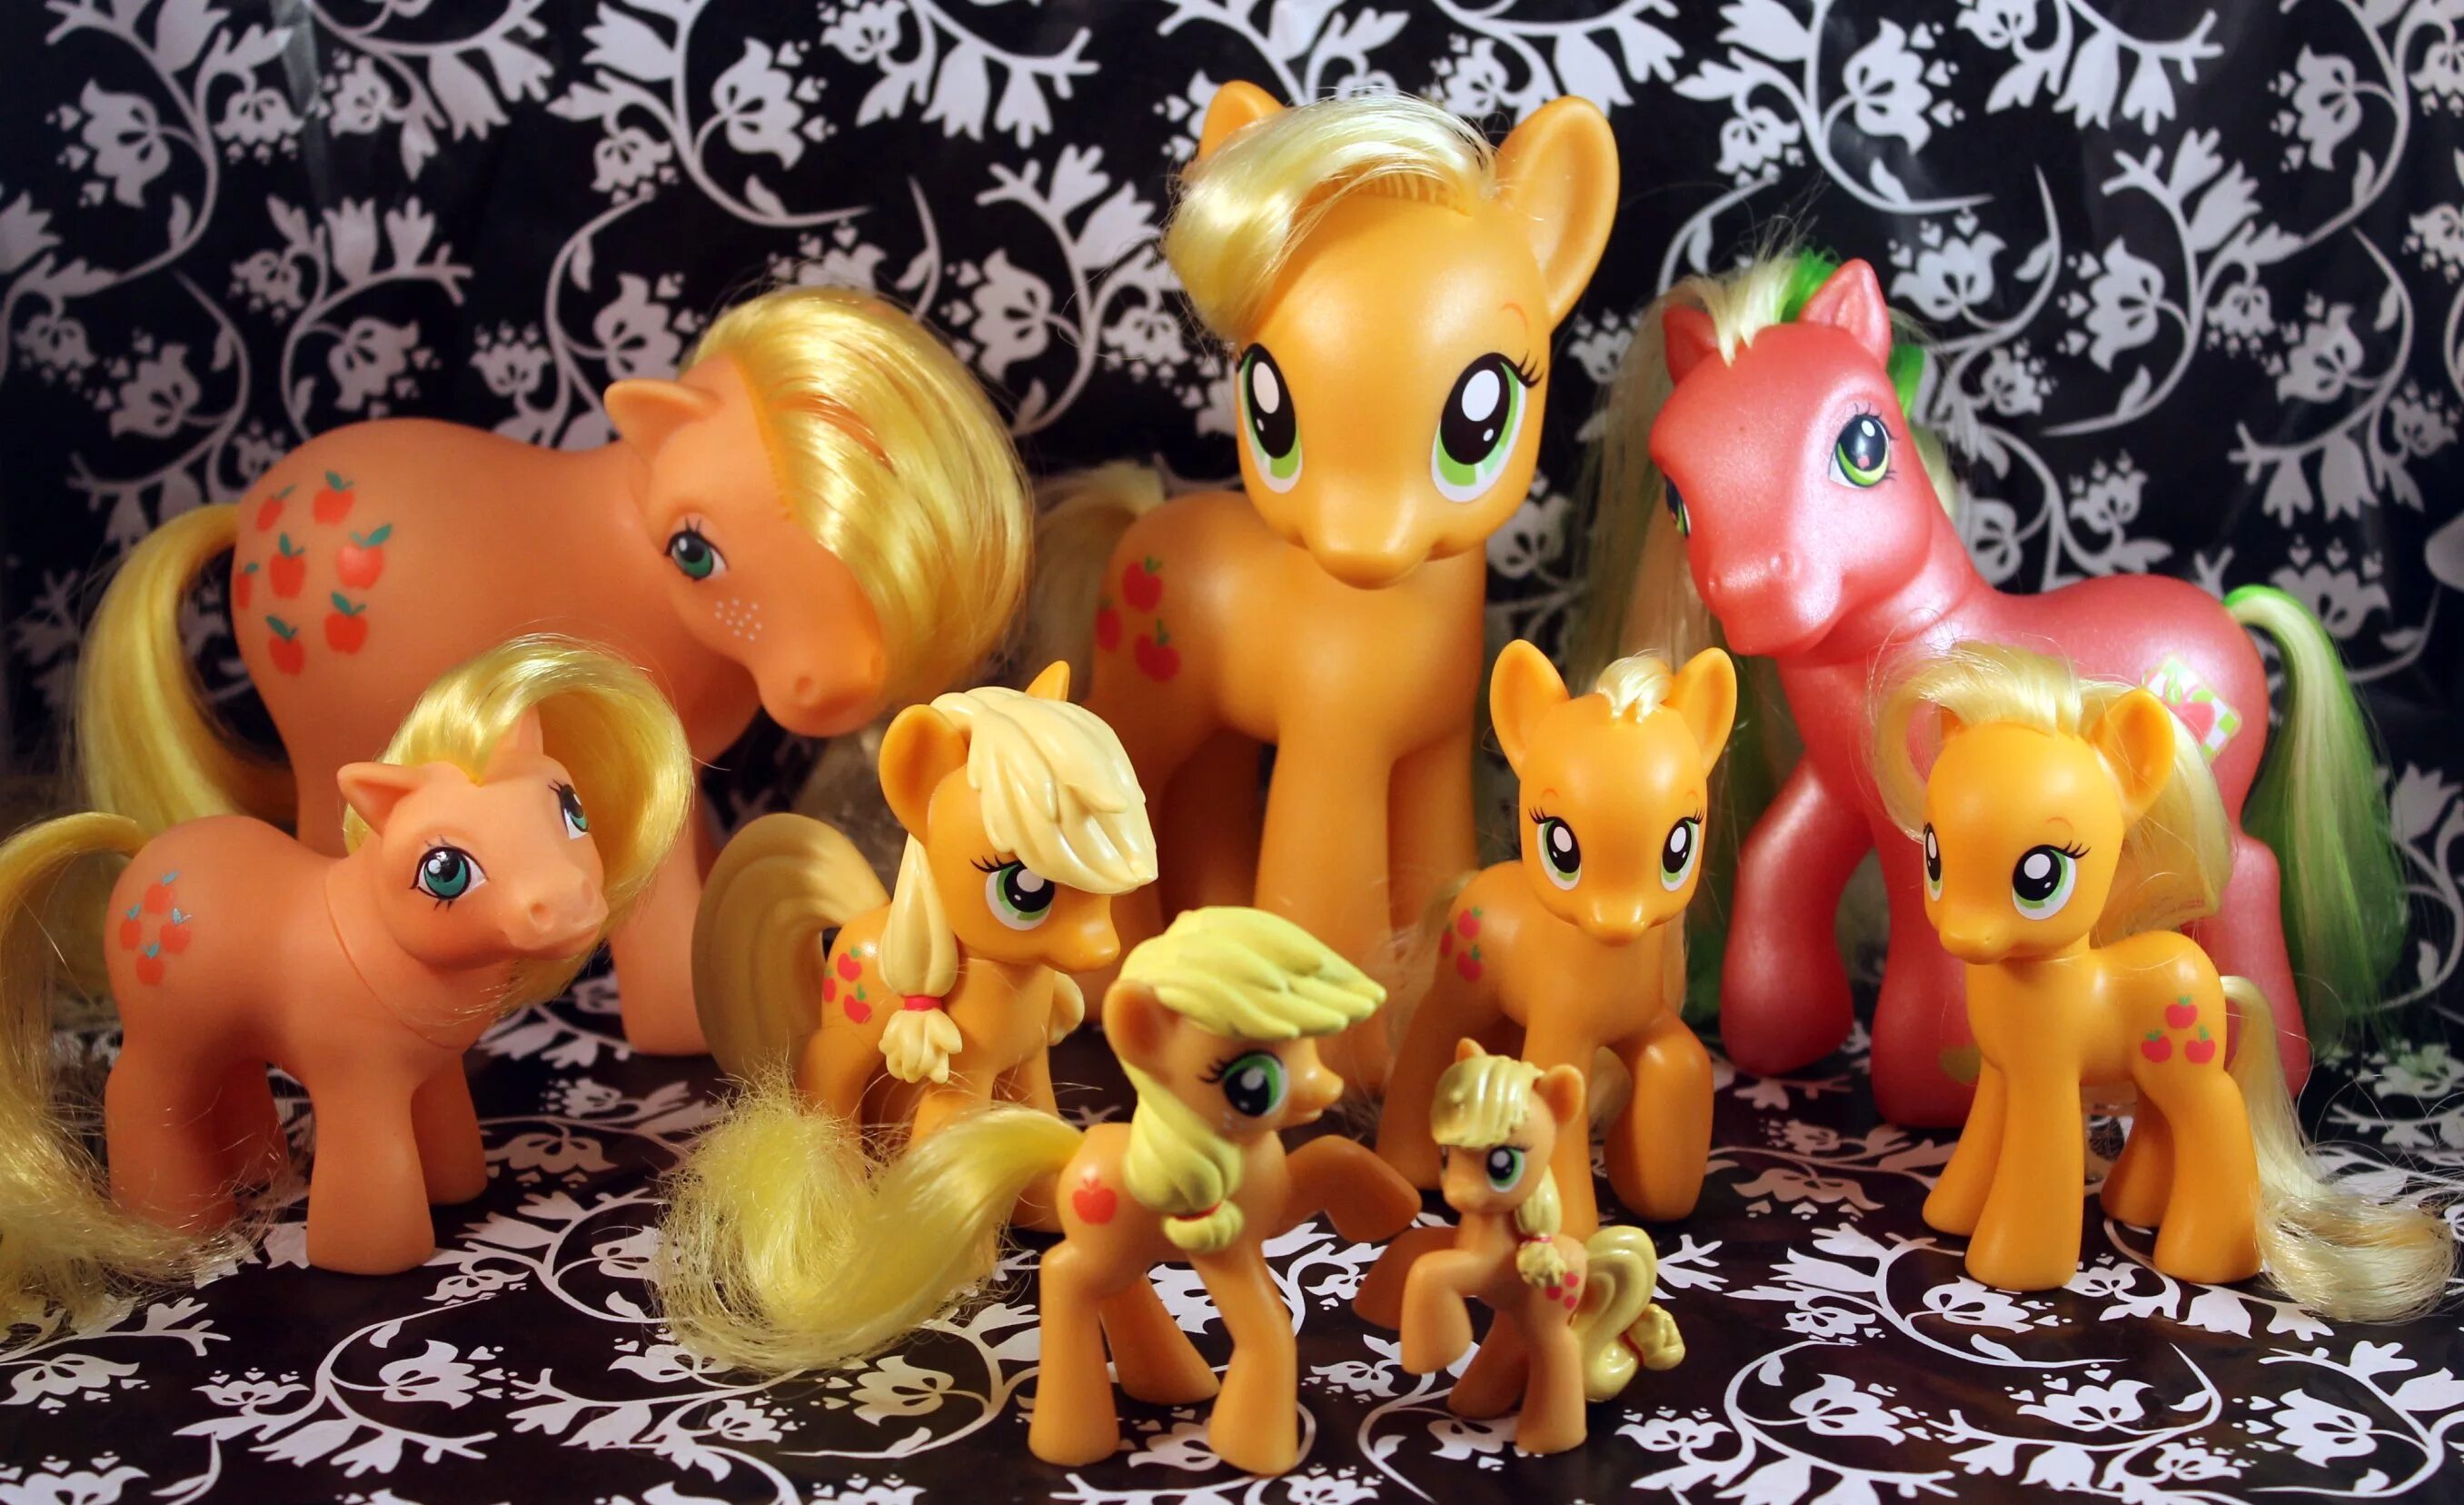 Пони поколение игрушки. My little Pony игрушки Эпплджек. Пони 5 поколение Эпплджек. Эпплджек игрушка пони Hasbro 2010. My little Pony 1 поколение игрушки.